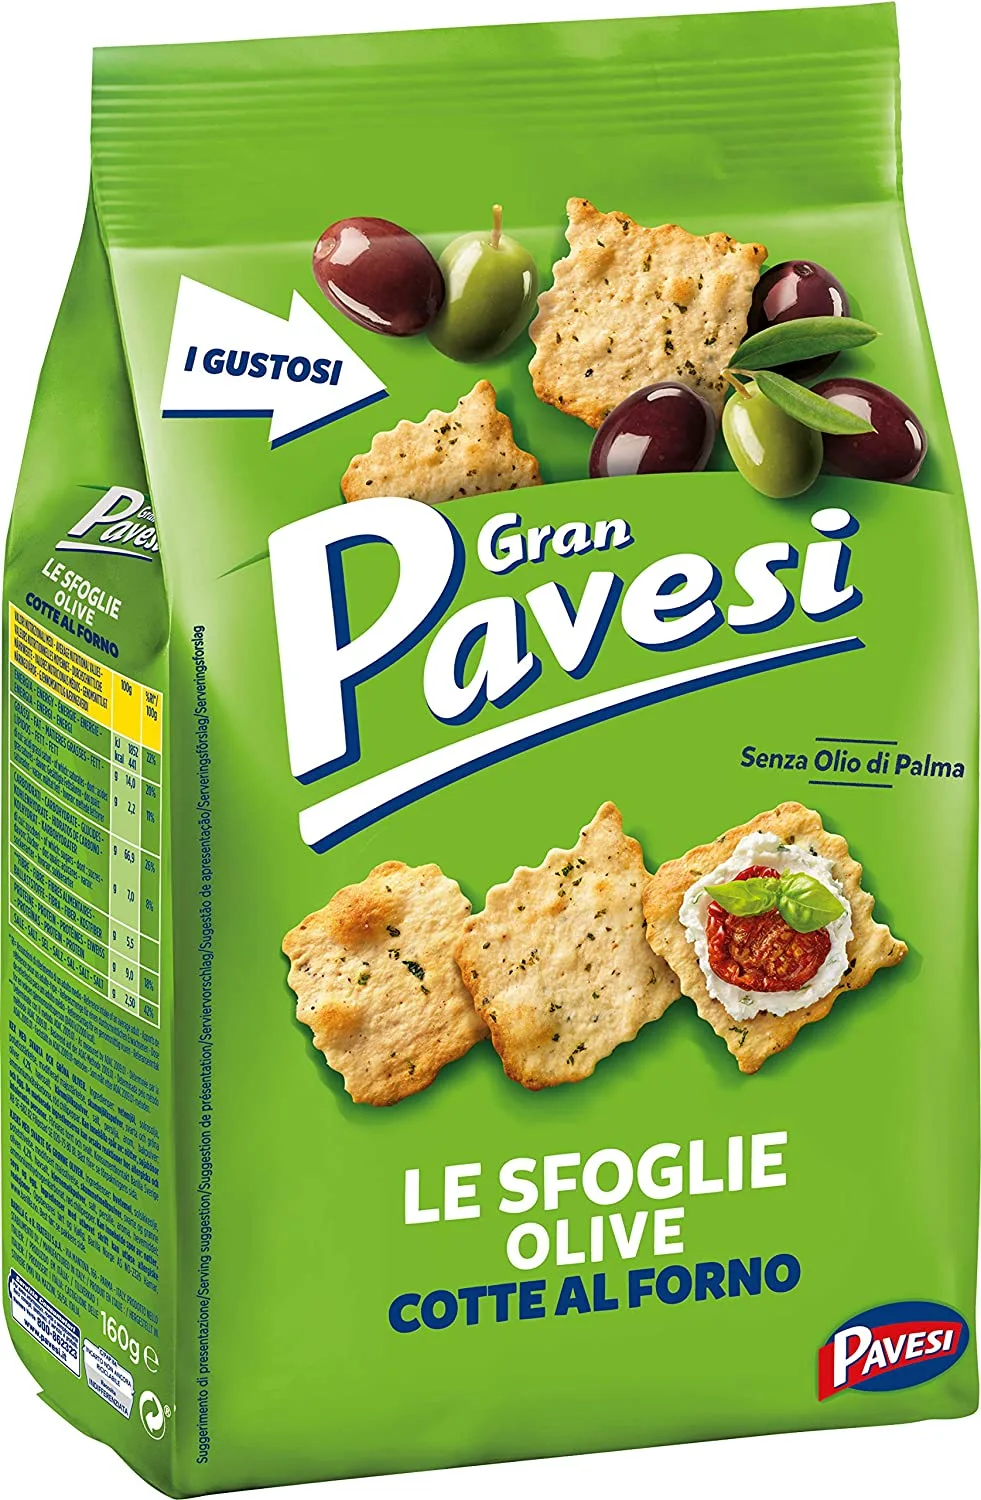 Pavesi Le Sfoglie Olive (Olive crackers) 160g